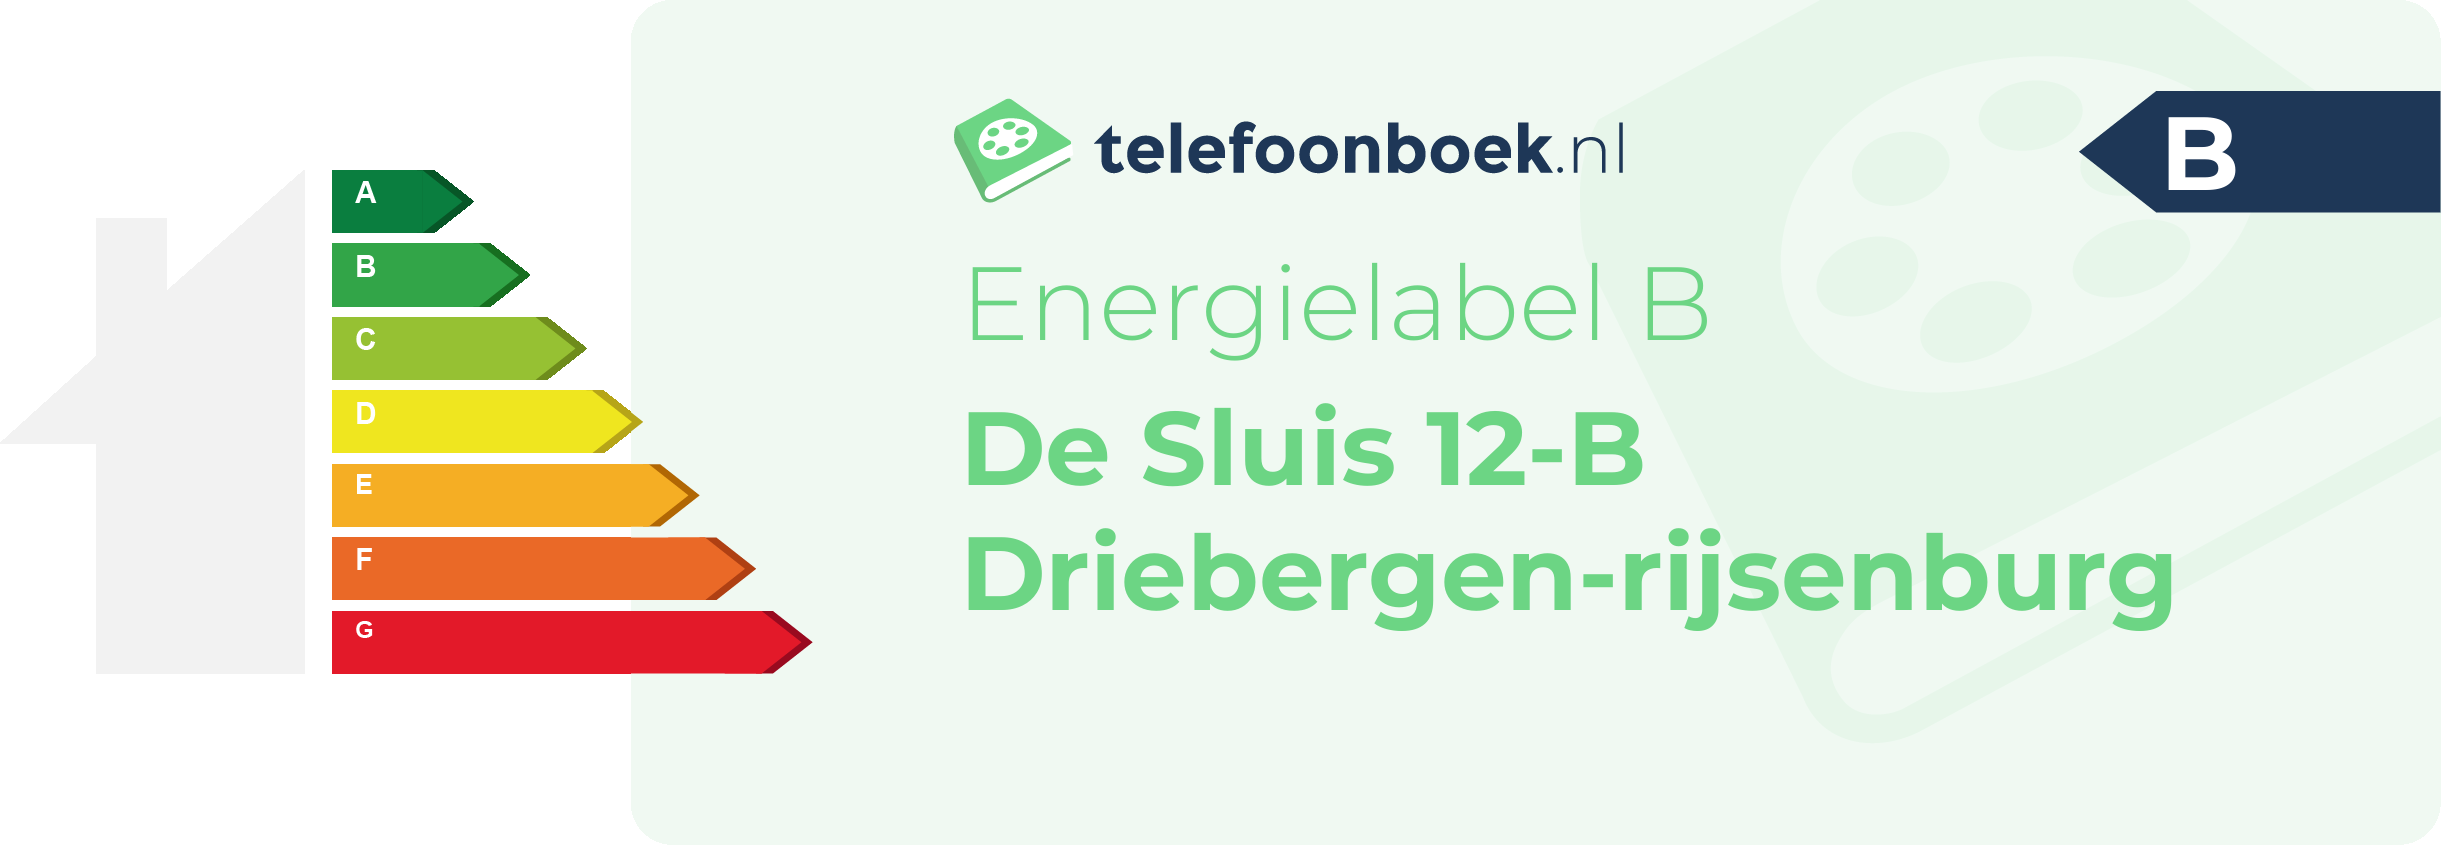 Energielabel De Sluis 12-B Driebergen-Rijsenburg